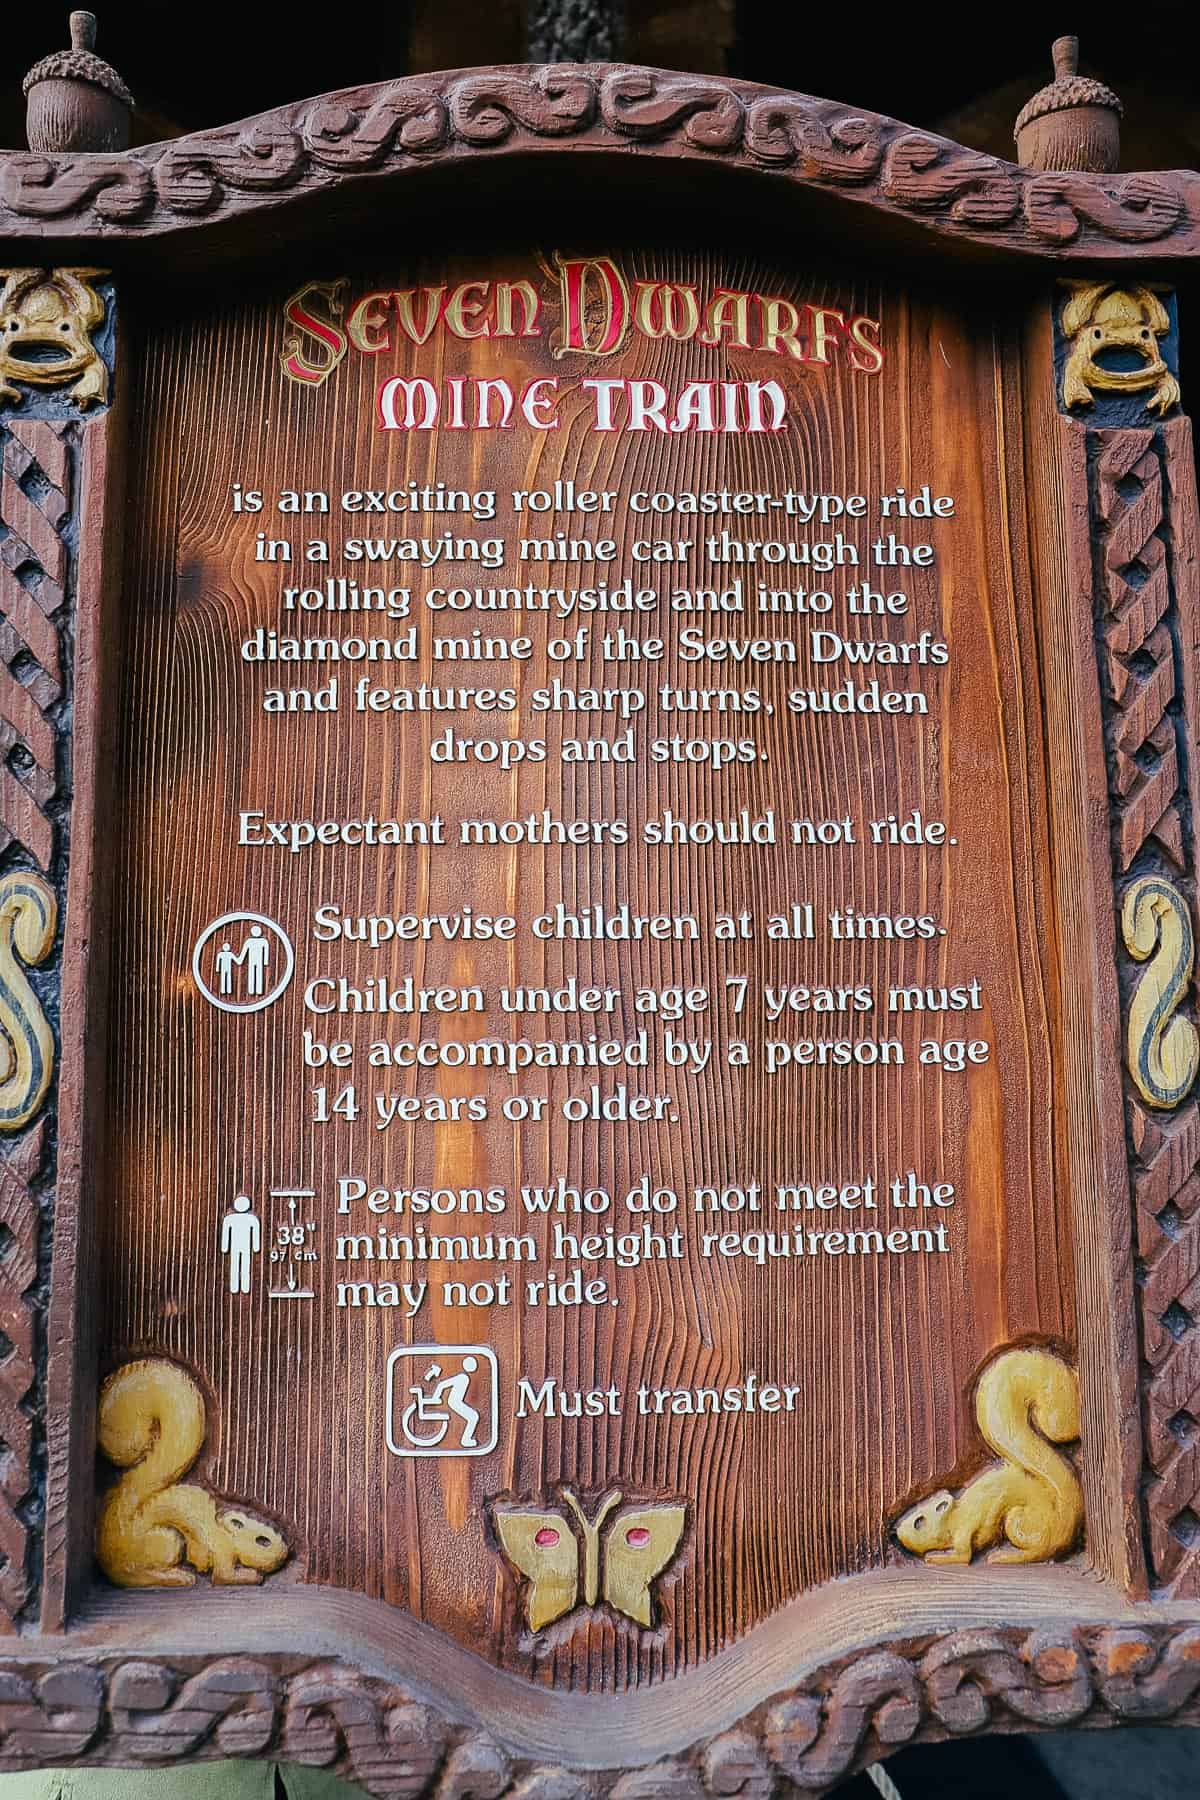 Seven Dwarfs Mine Train posted ride rules. 